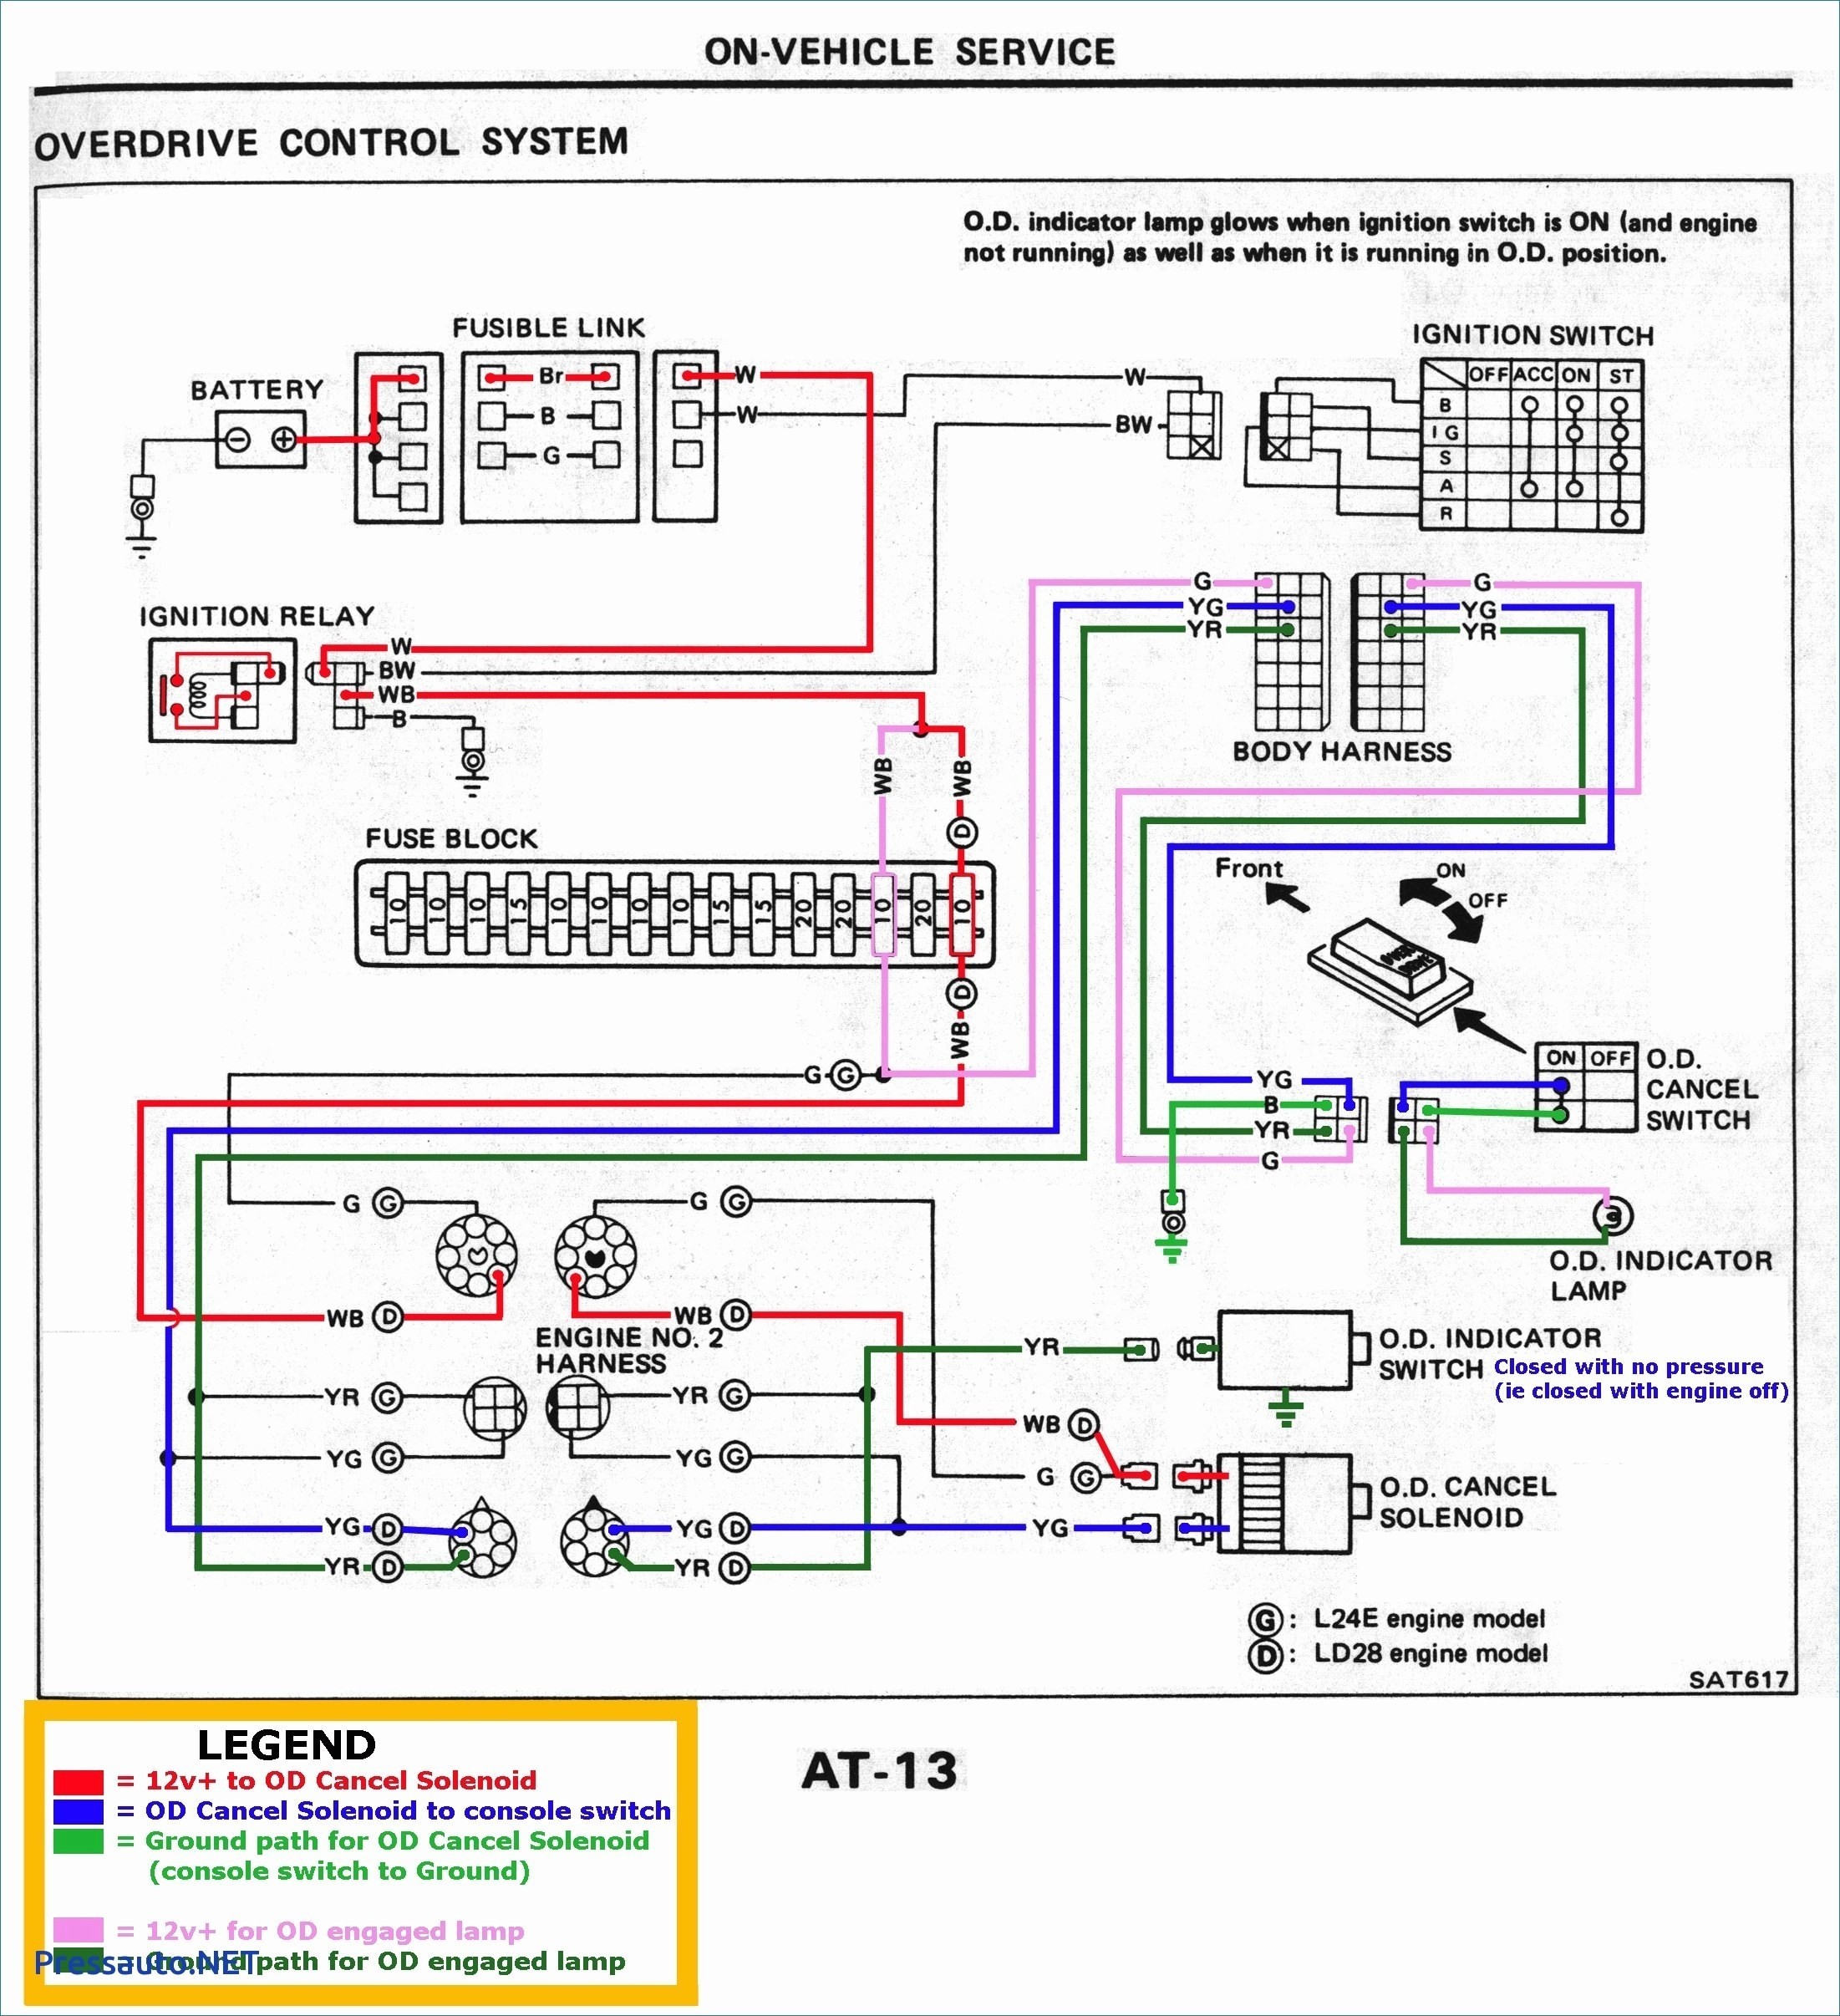 Kohler Ignition Switch Wiring Diagram Save Wiring Diagram for Kohler Mand Save Wiring Diagram Lawn Mower